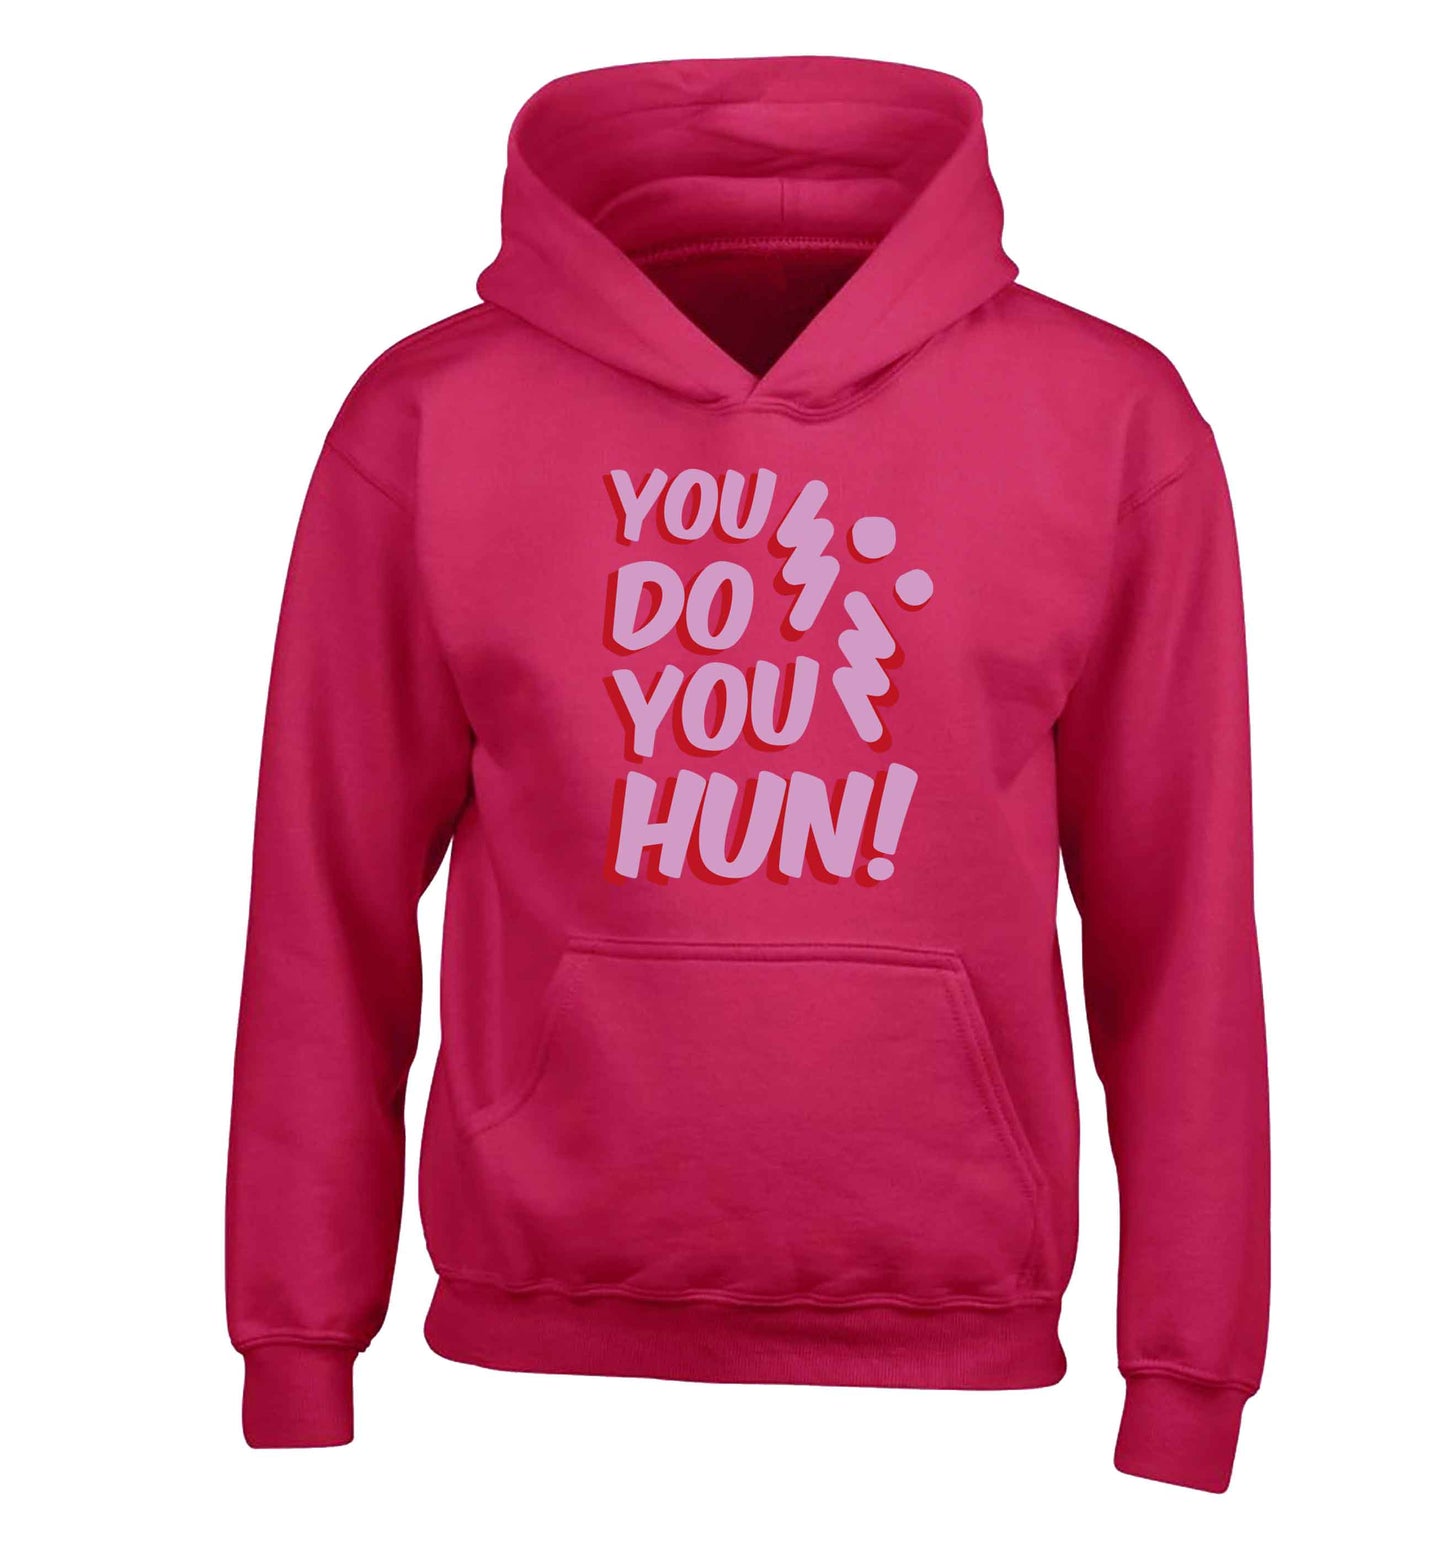 You do you hun children's pink hoodie 12-13 Years